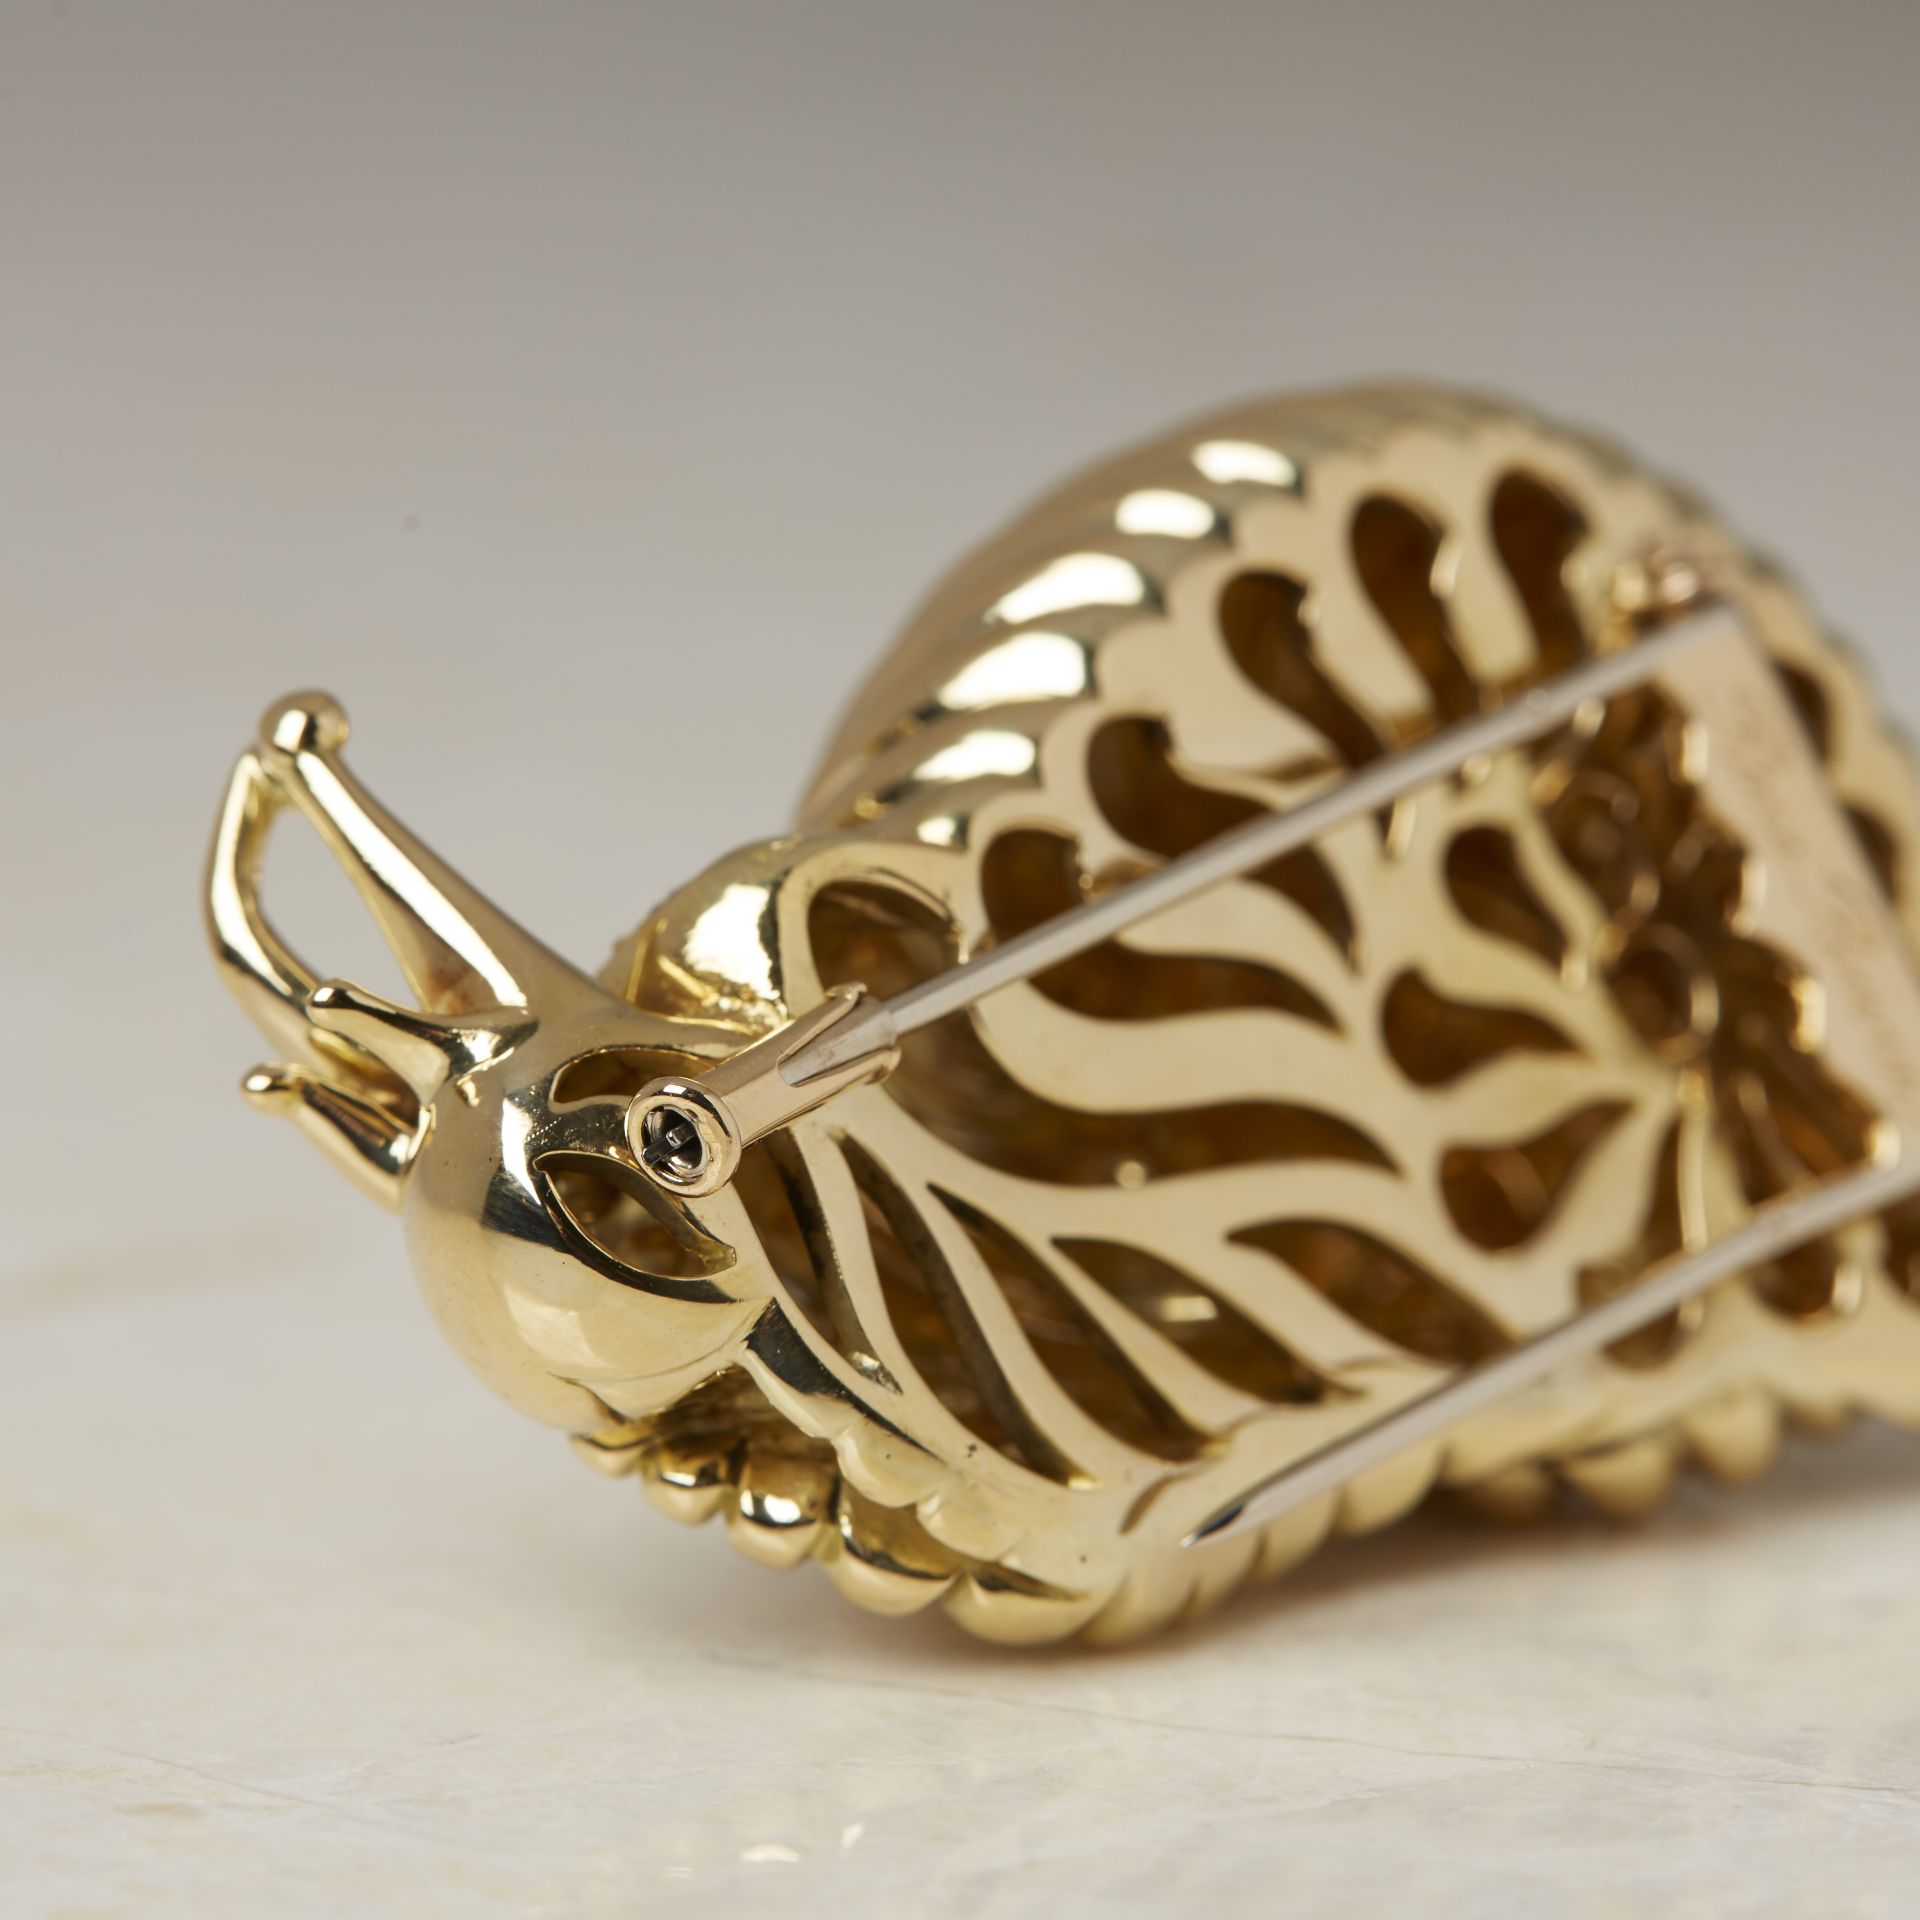 Rene Boivin 18k Yellow Gold Diamond Snail Brooch with Presentation Box - Image 10 of 19